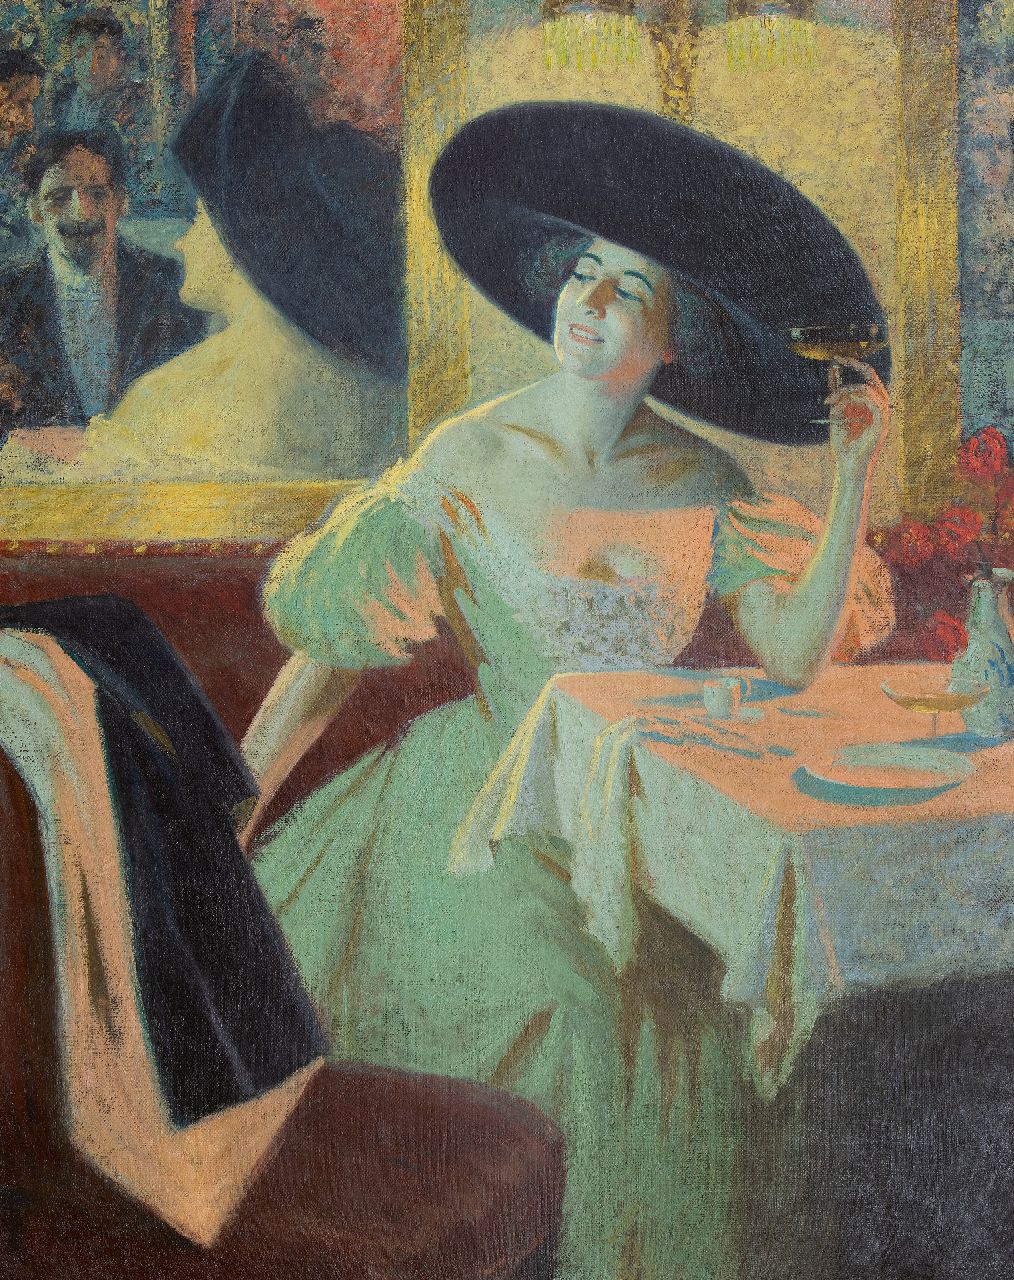 Reynolds W.J.  | 'Wellington' Jarard Reynolds | Schilderijen te koop aangeboden | Au Café Parisienne, olieverf op doek 142,5 x 112,5 cm, gesigneerd verso